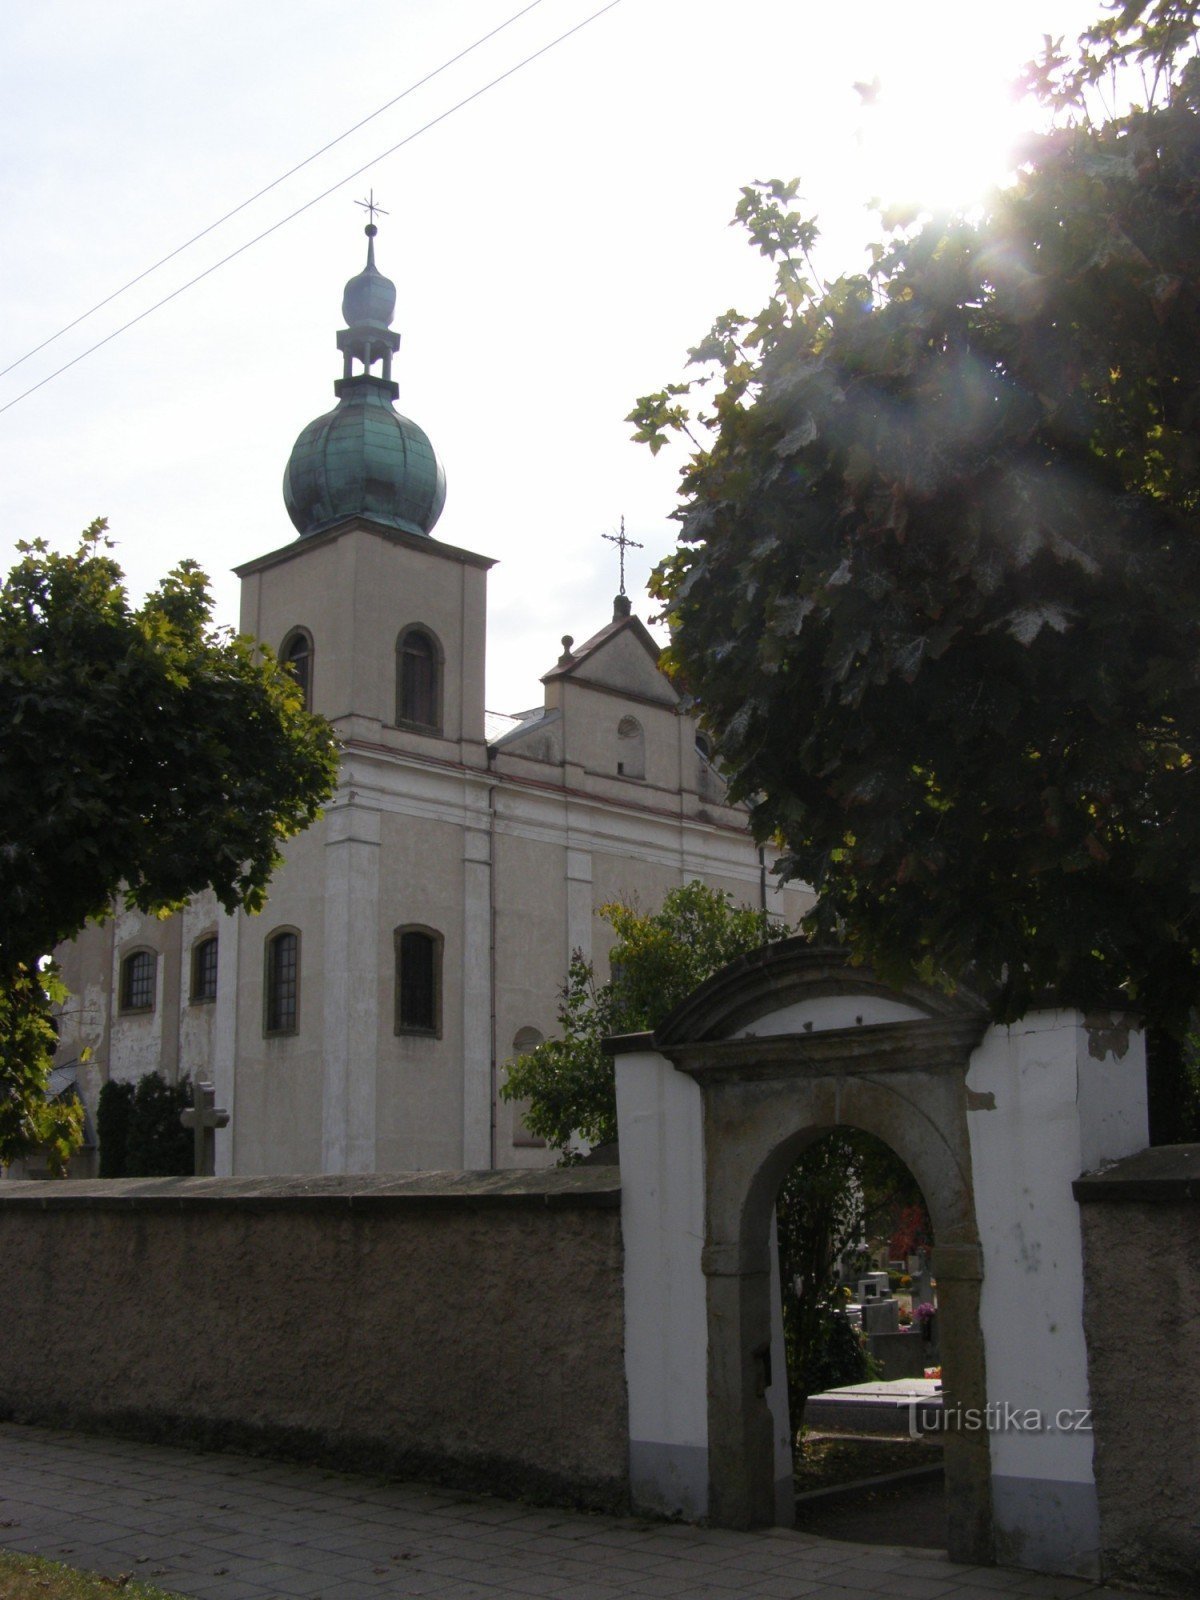 Kostelec nad Orlicí - Kirche St. Anne